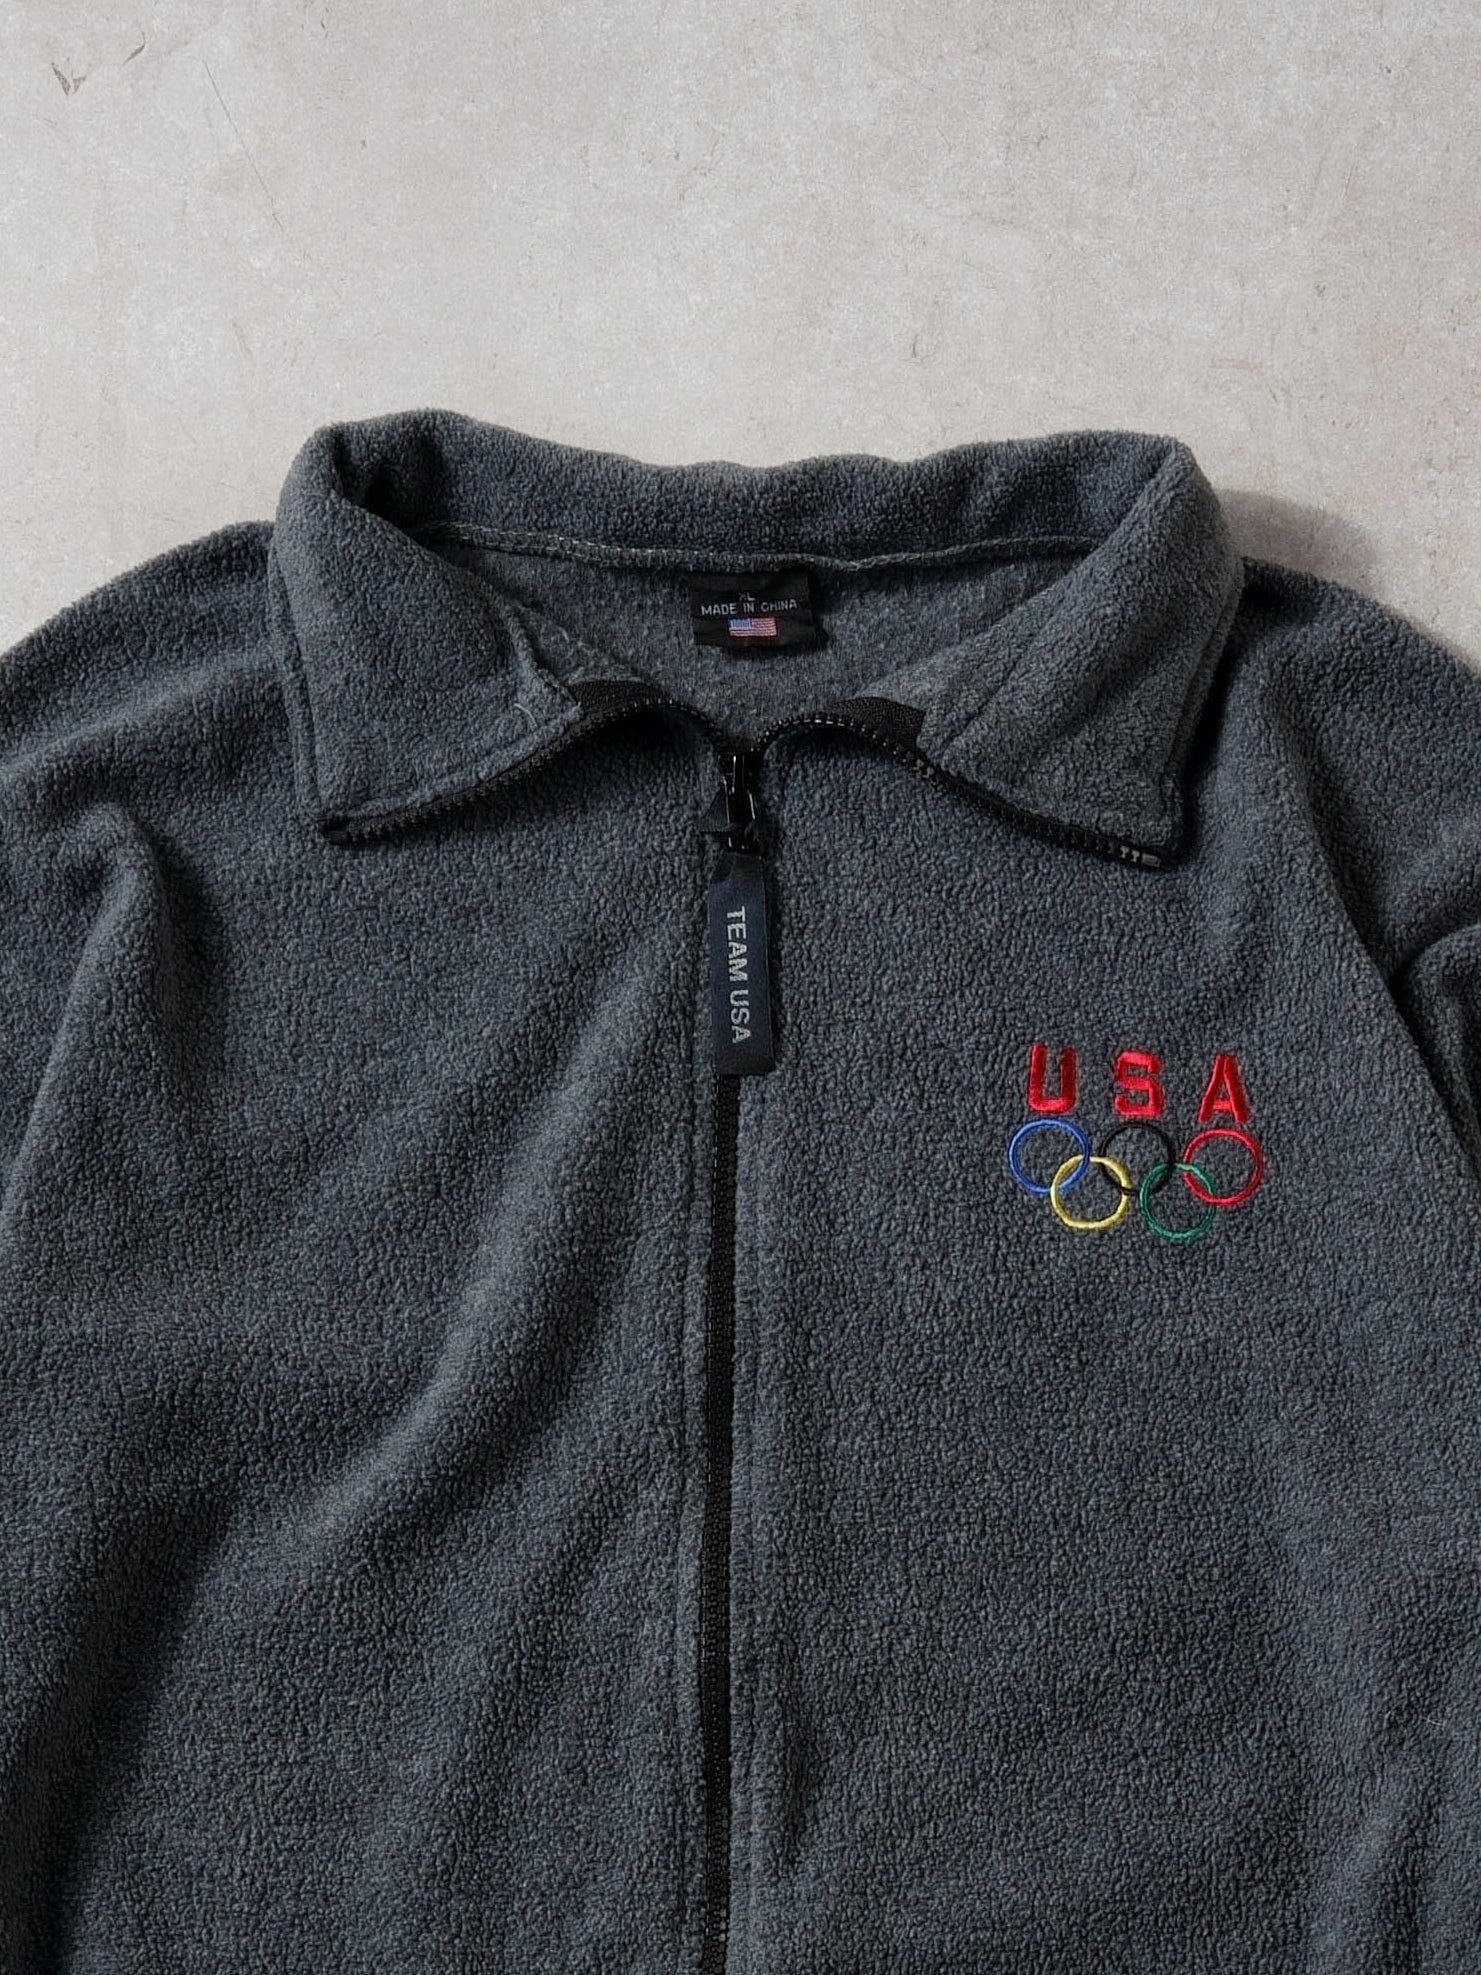 Vintage 90s Dark Grey Team USA Olympics Fleece Zipup (L)